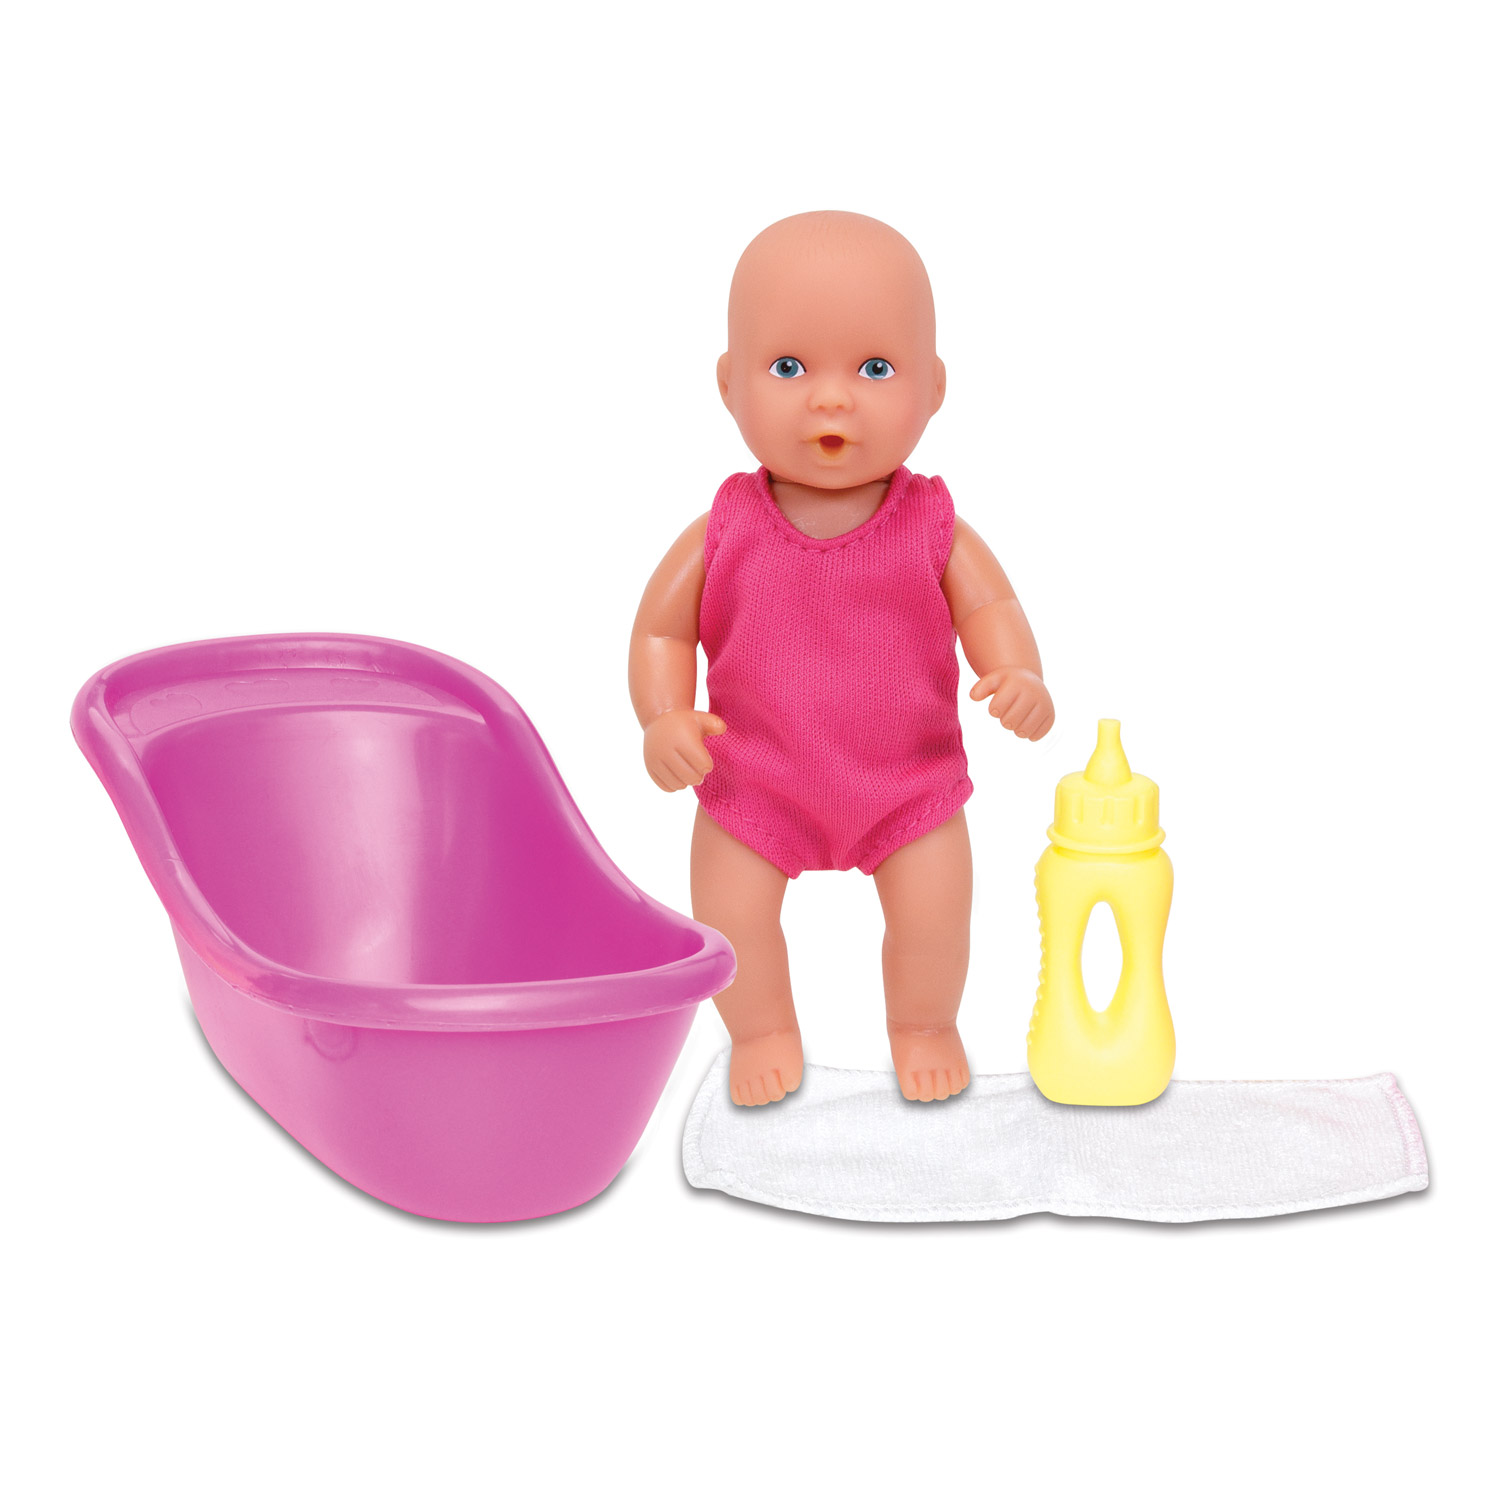 Mini New Born Baby dans un ensemble de bain